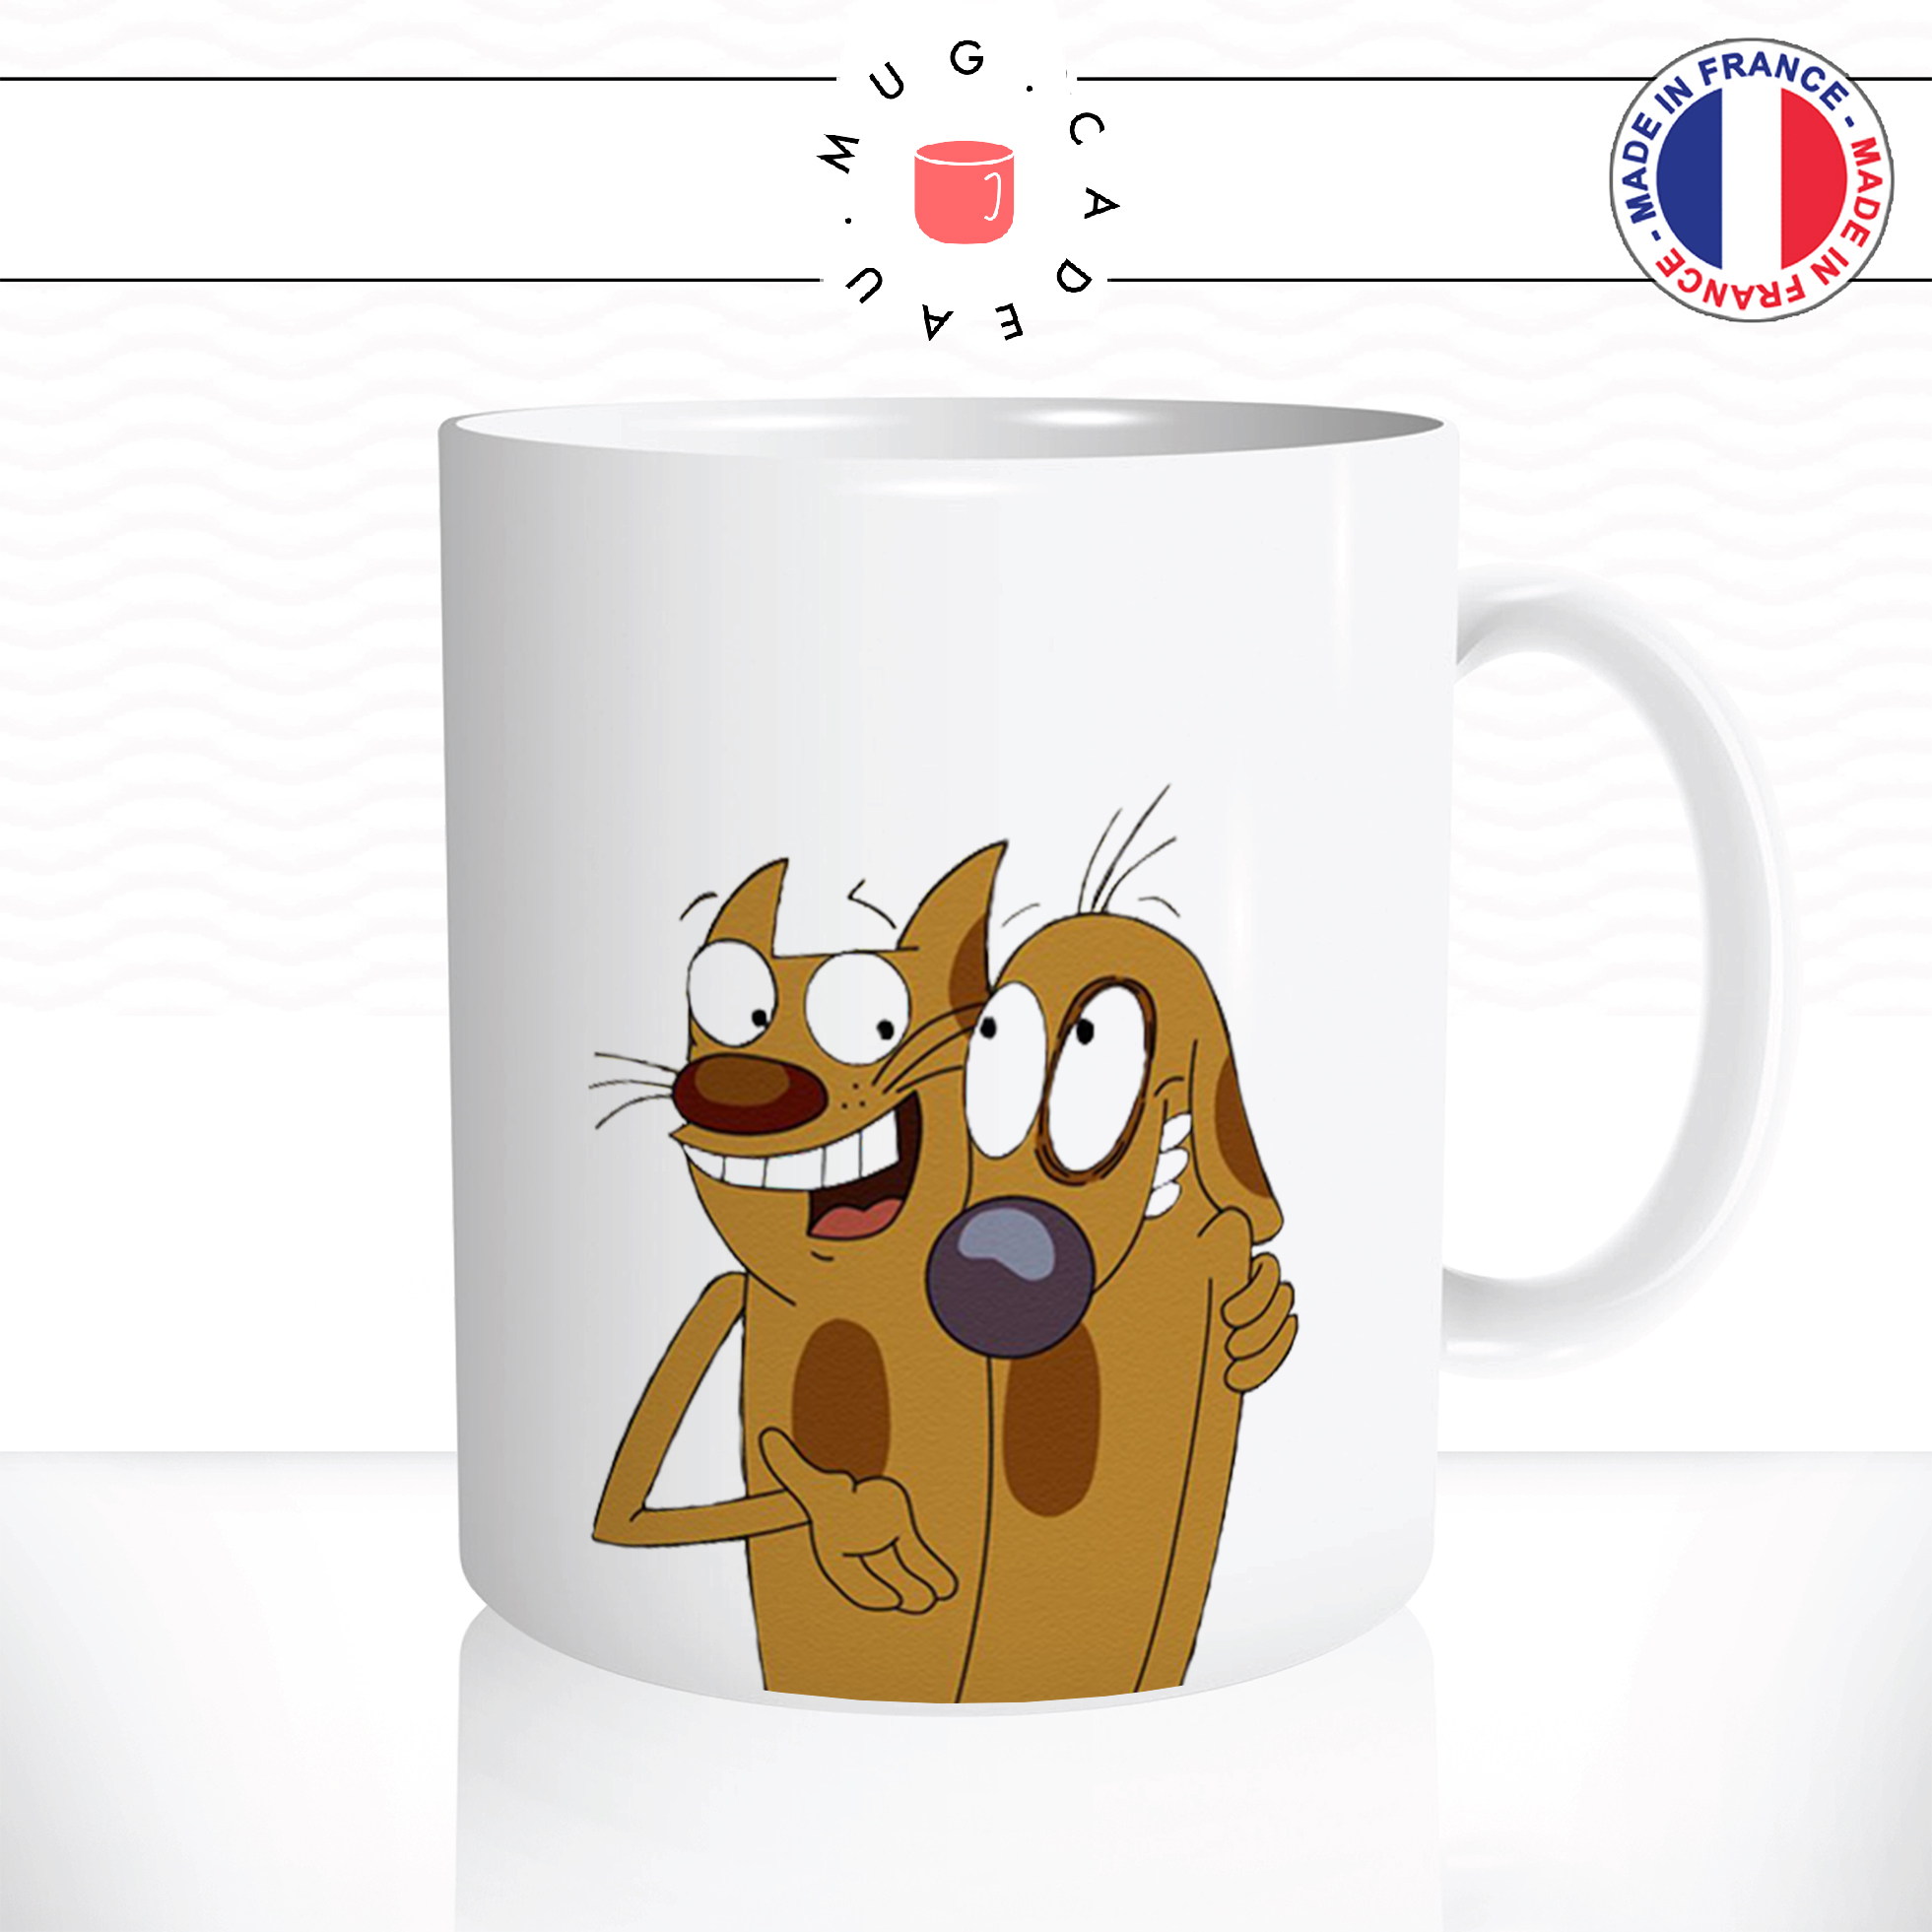 mug-tasse-ref35-dessin-anime-mi-chien-mi-chat-cafe-the-mugs-tasses-personnalise-anse-droite